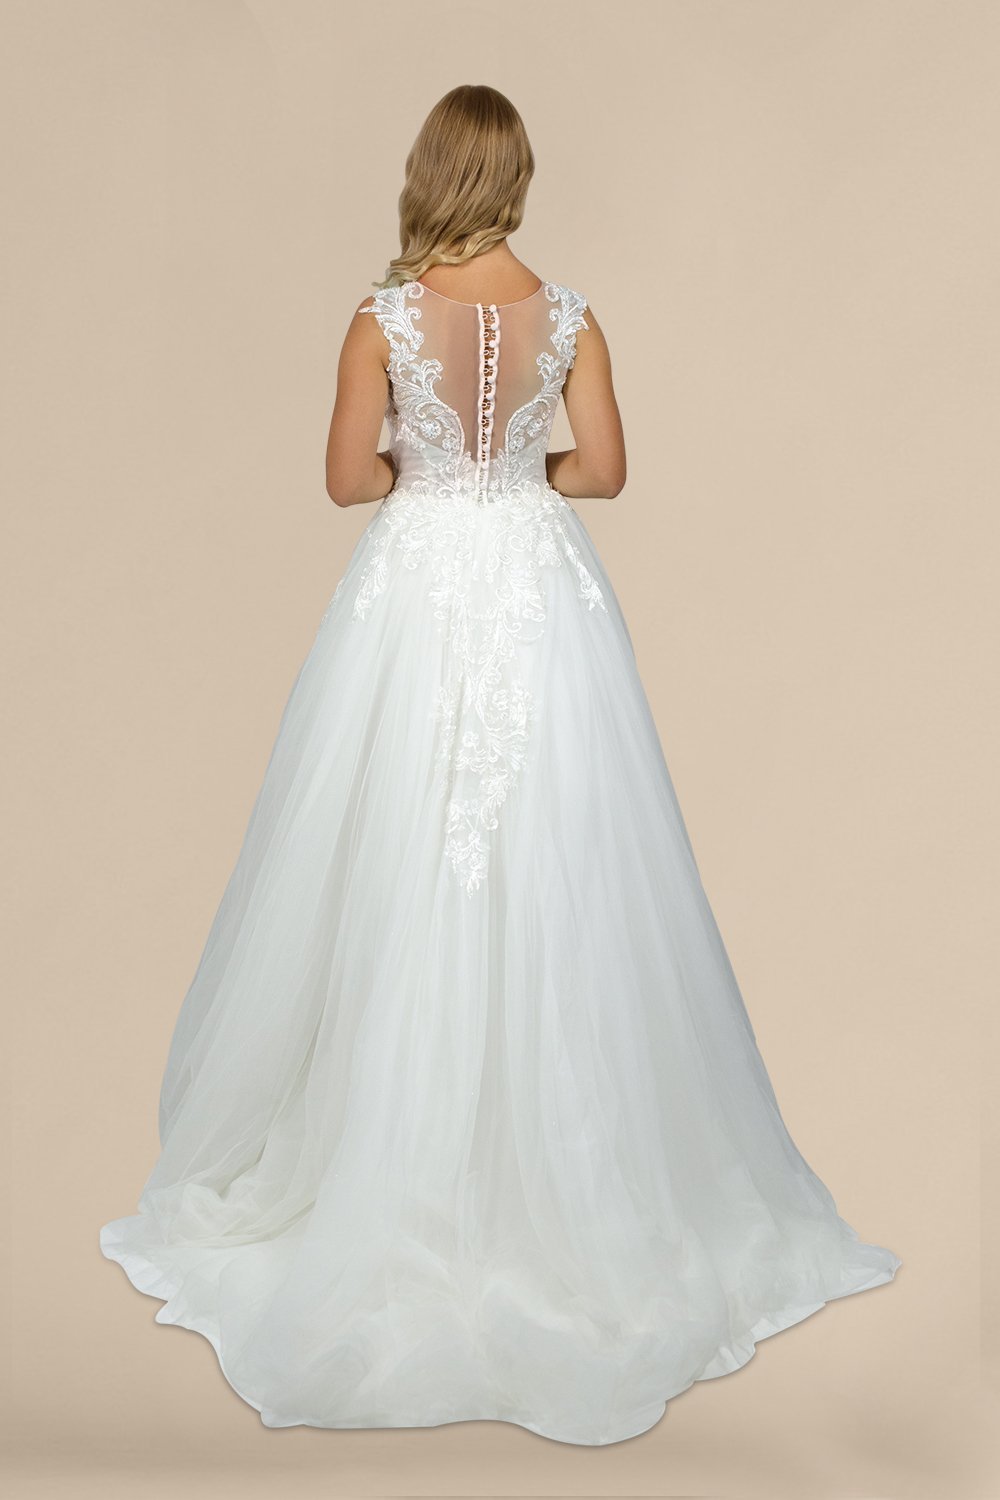 custom made bespoke wedding dresses perth australia envious bridal & formal